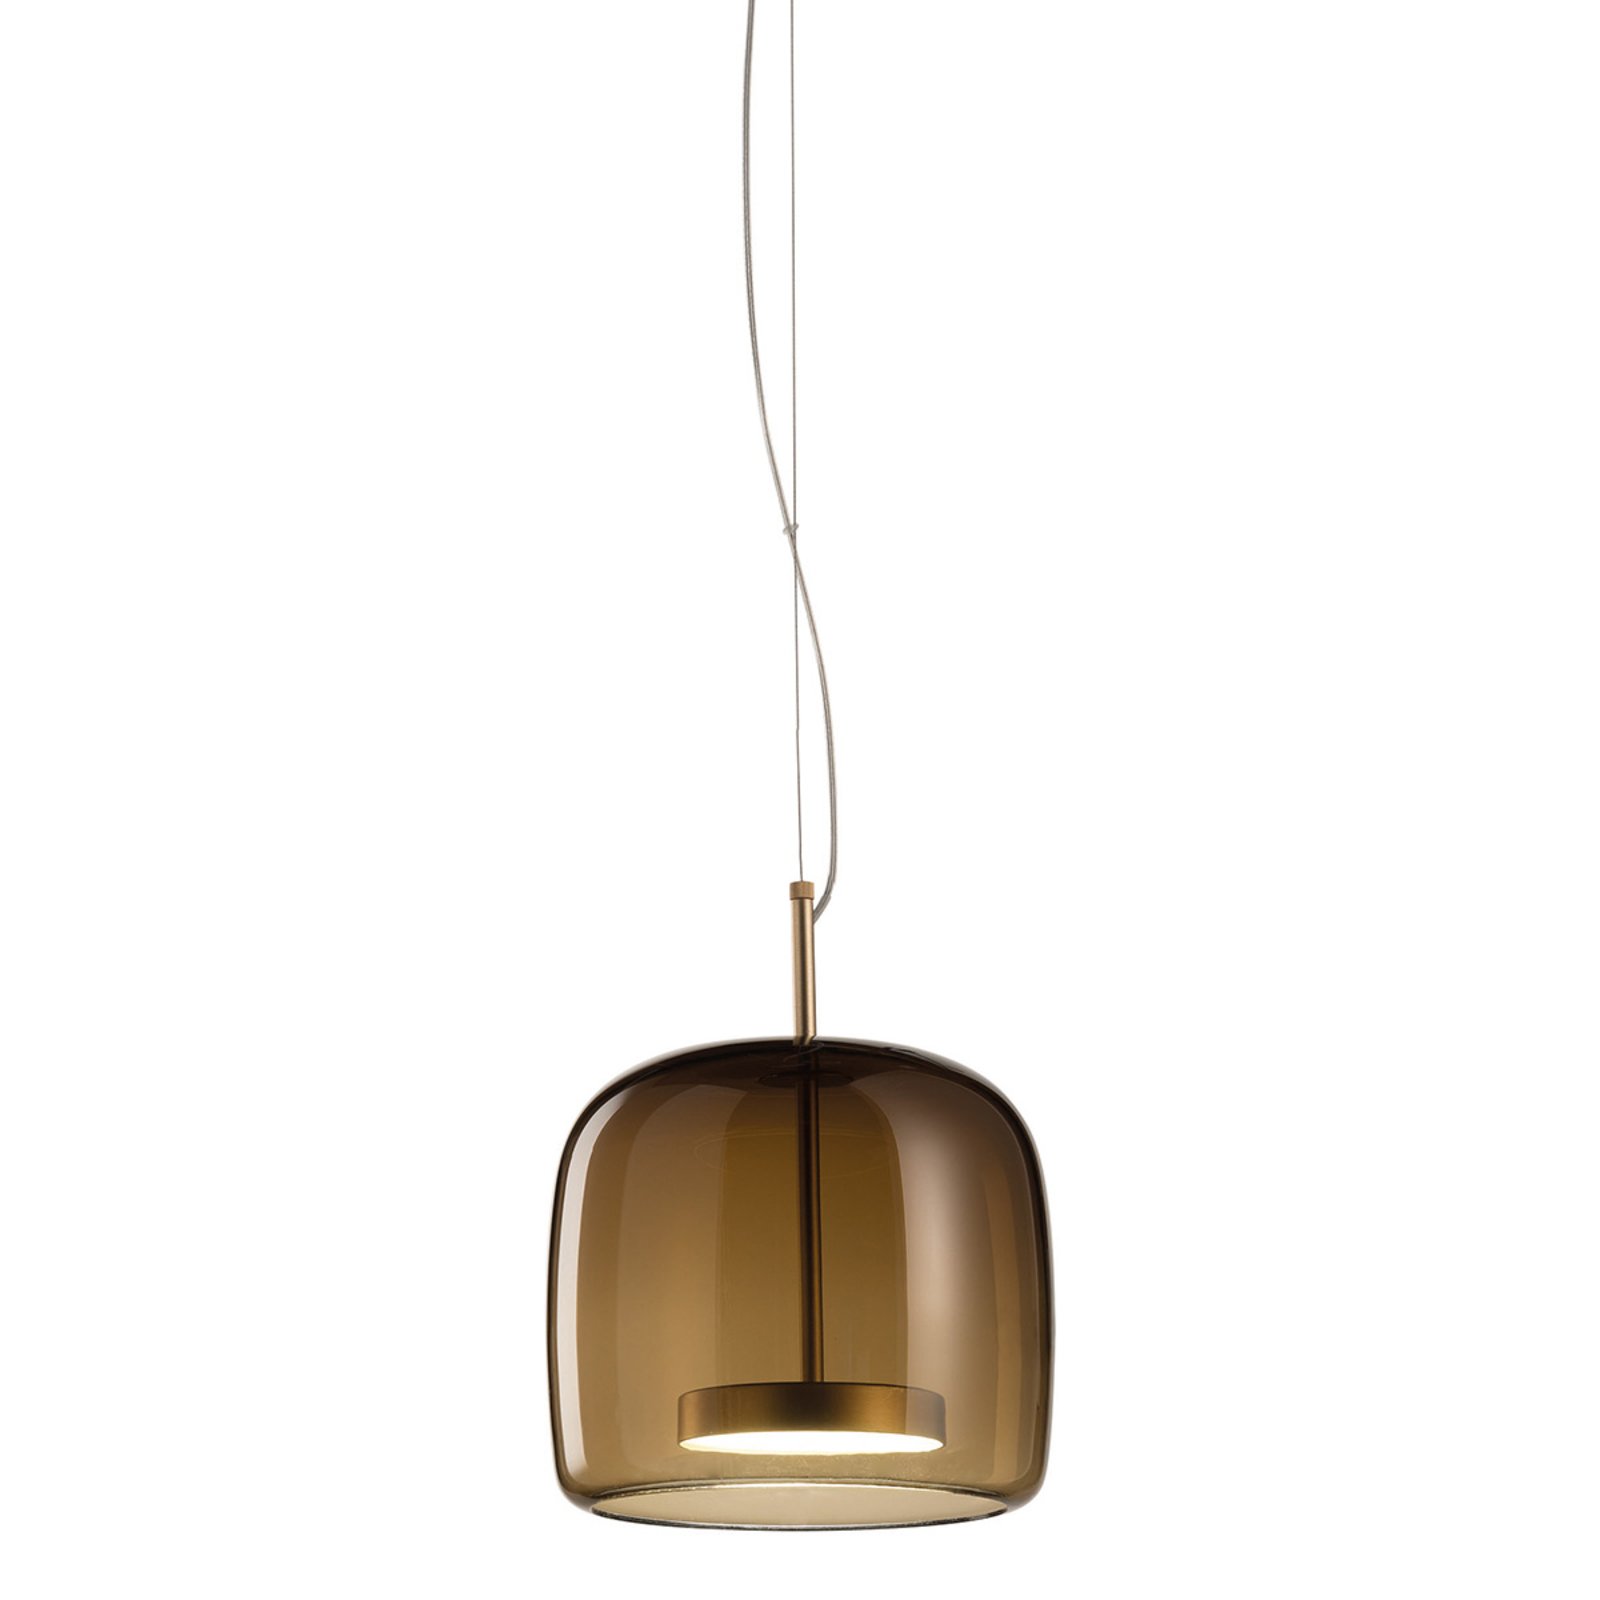 Jube SP 1 P pendant light made of glass, brown